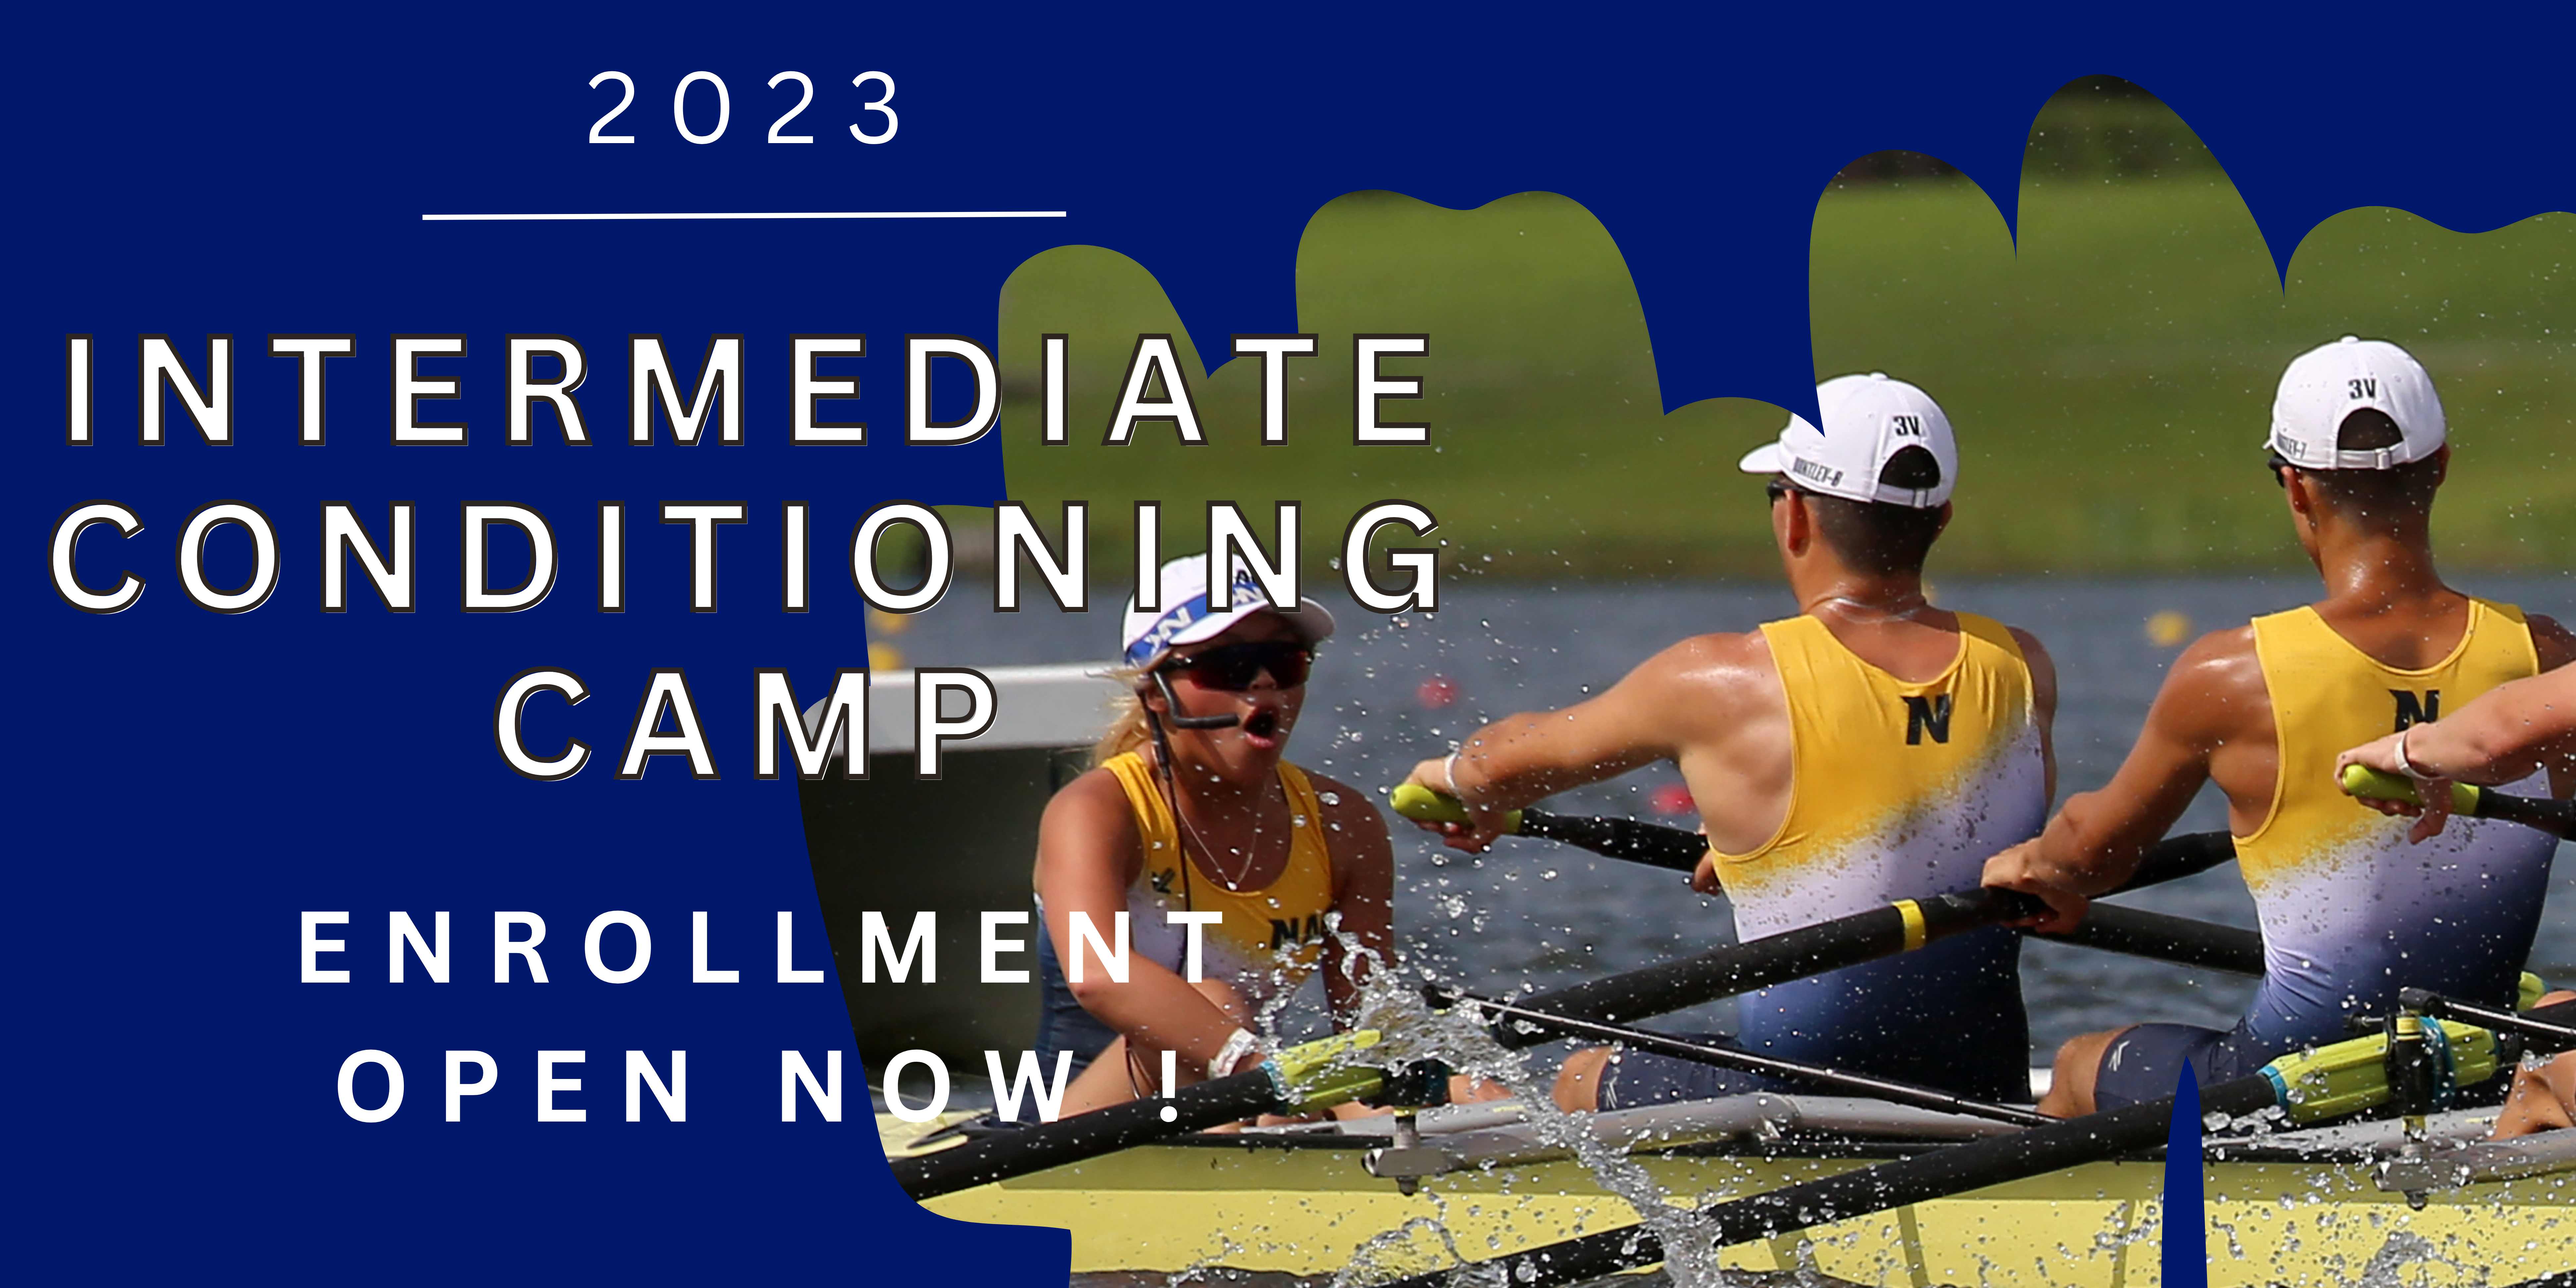 Intermediate Conditioning Camp - Newport Aquatic Center summer rowing camp 2023 enrollment is open now